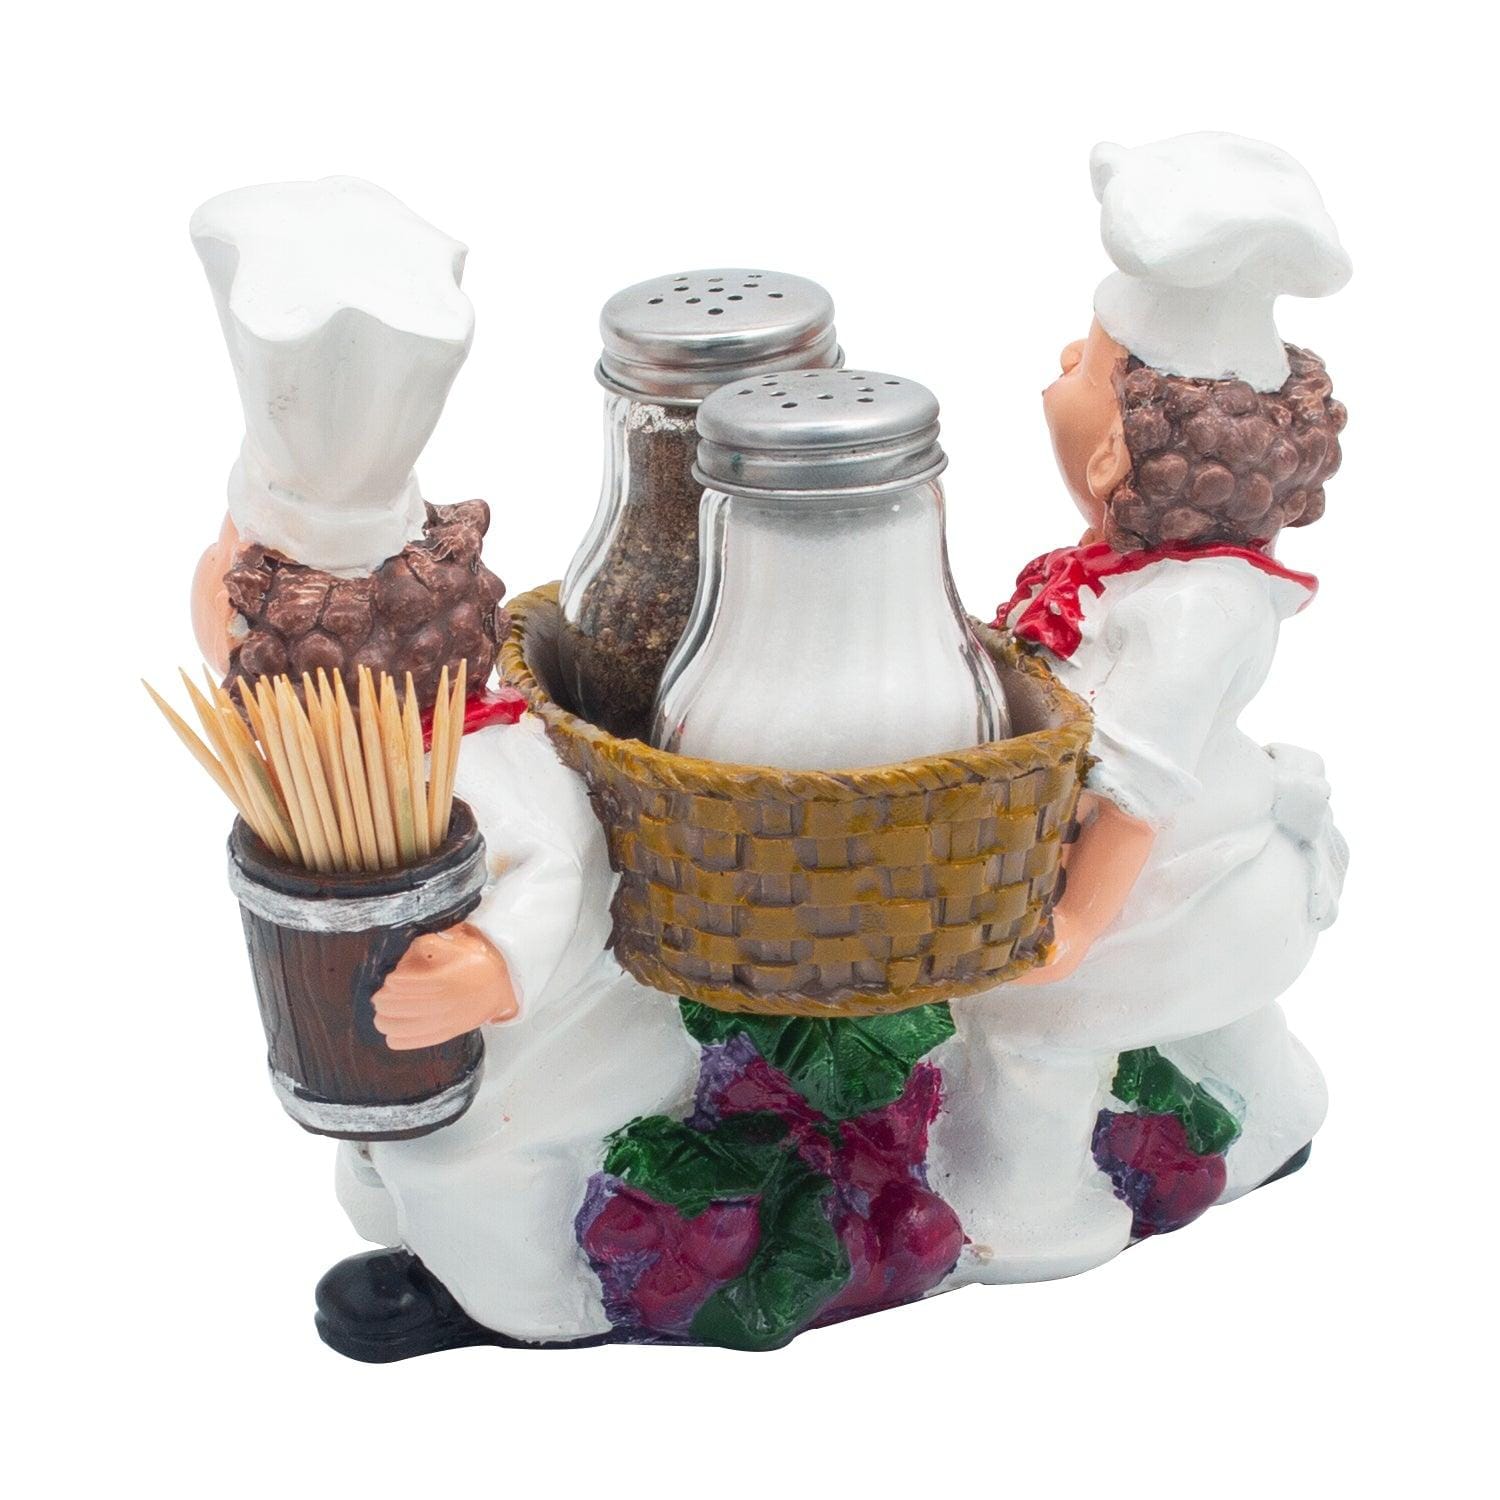 Foodie Chefs Figurine Resin Salt & Pepper Shakers in Basket Holder Set